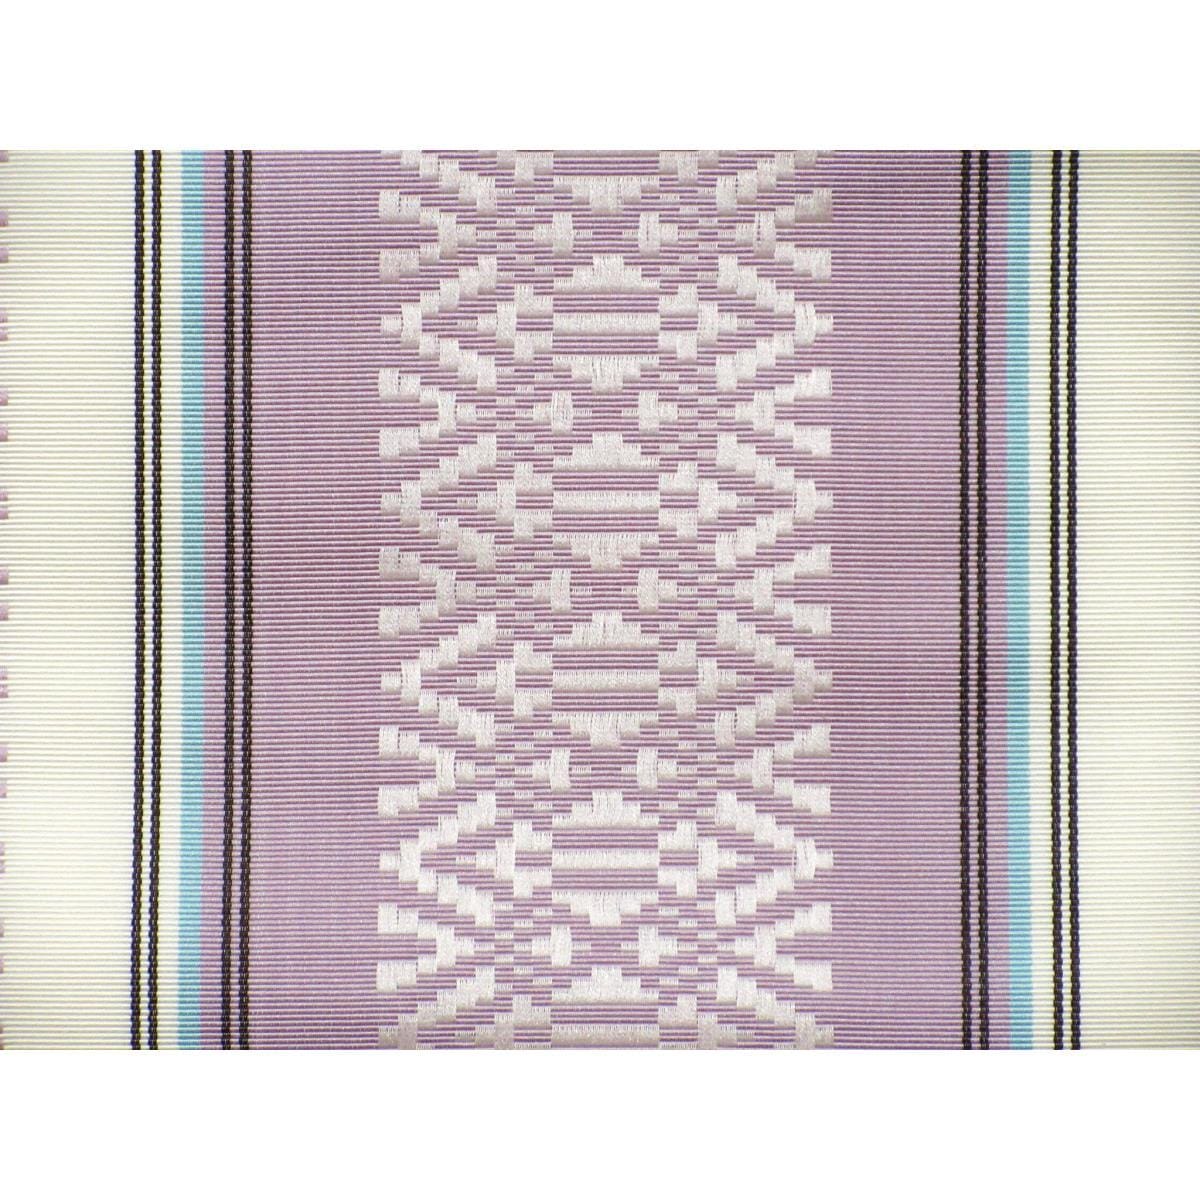 [Unused items] Nagoya obi with Hakataori pattern